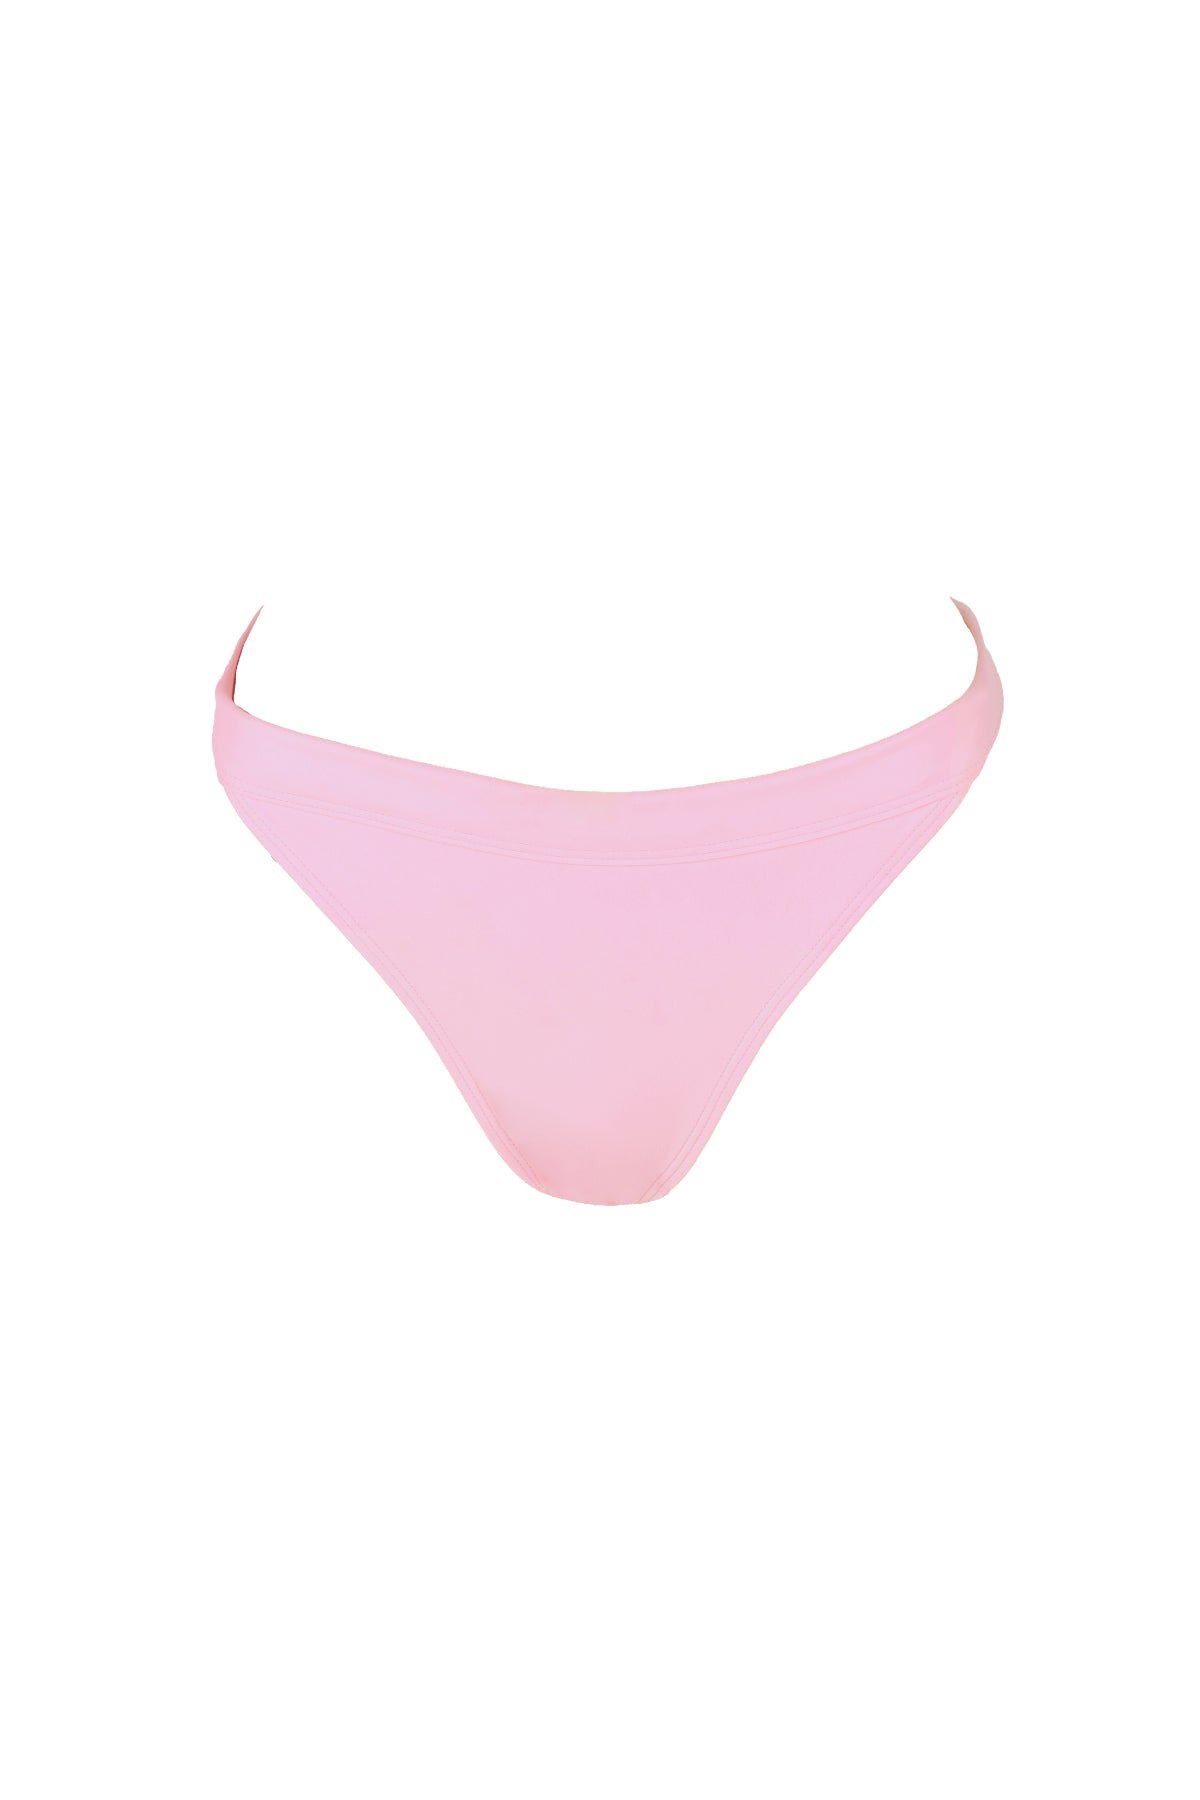 Hedy mid rise bikini bottoms in pink from luxury sustainable swimwear brand Koraru